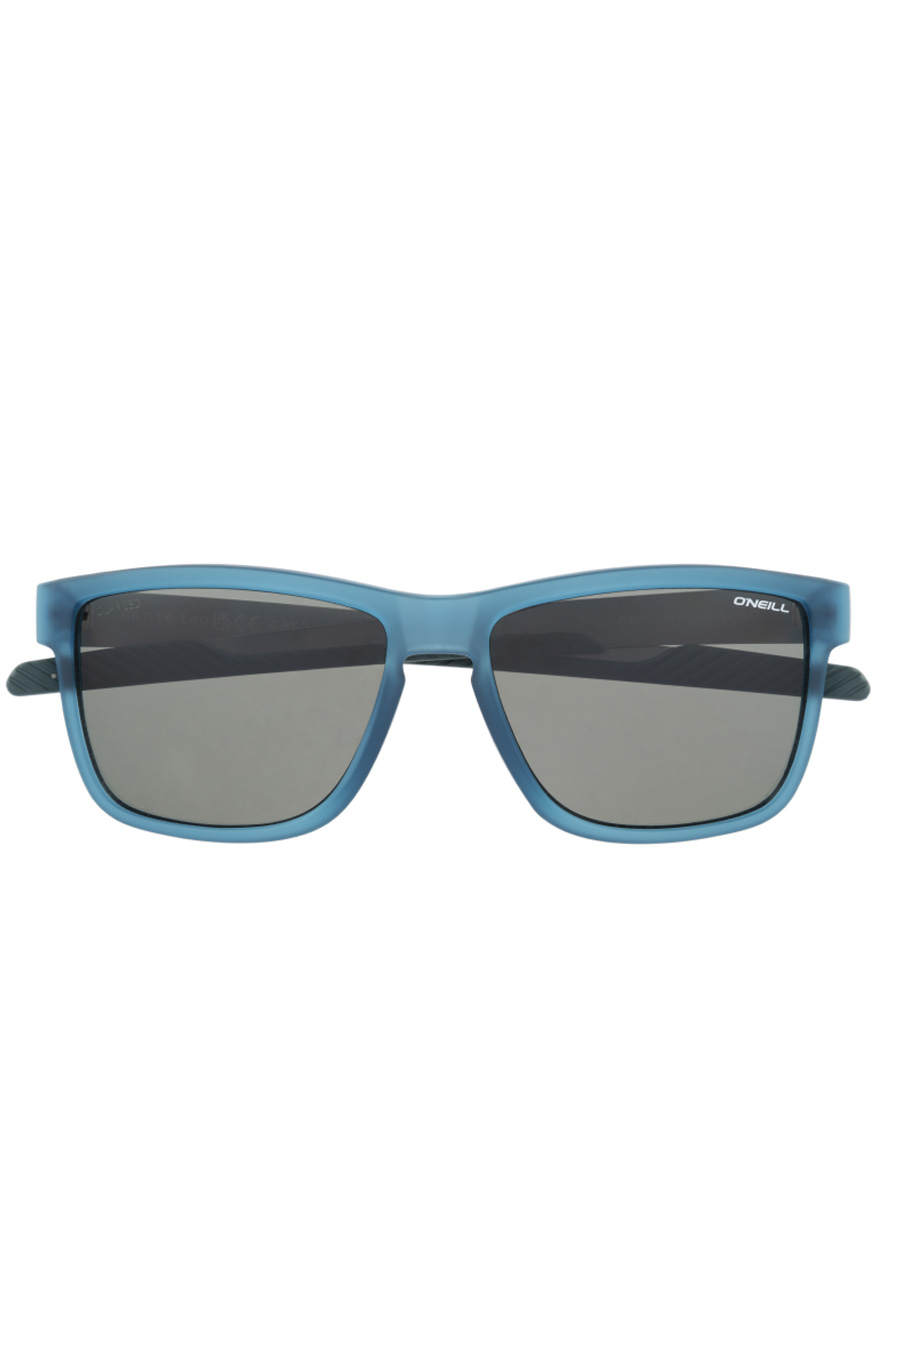 Sunglasses ONEILL ONS-9006-20-105P